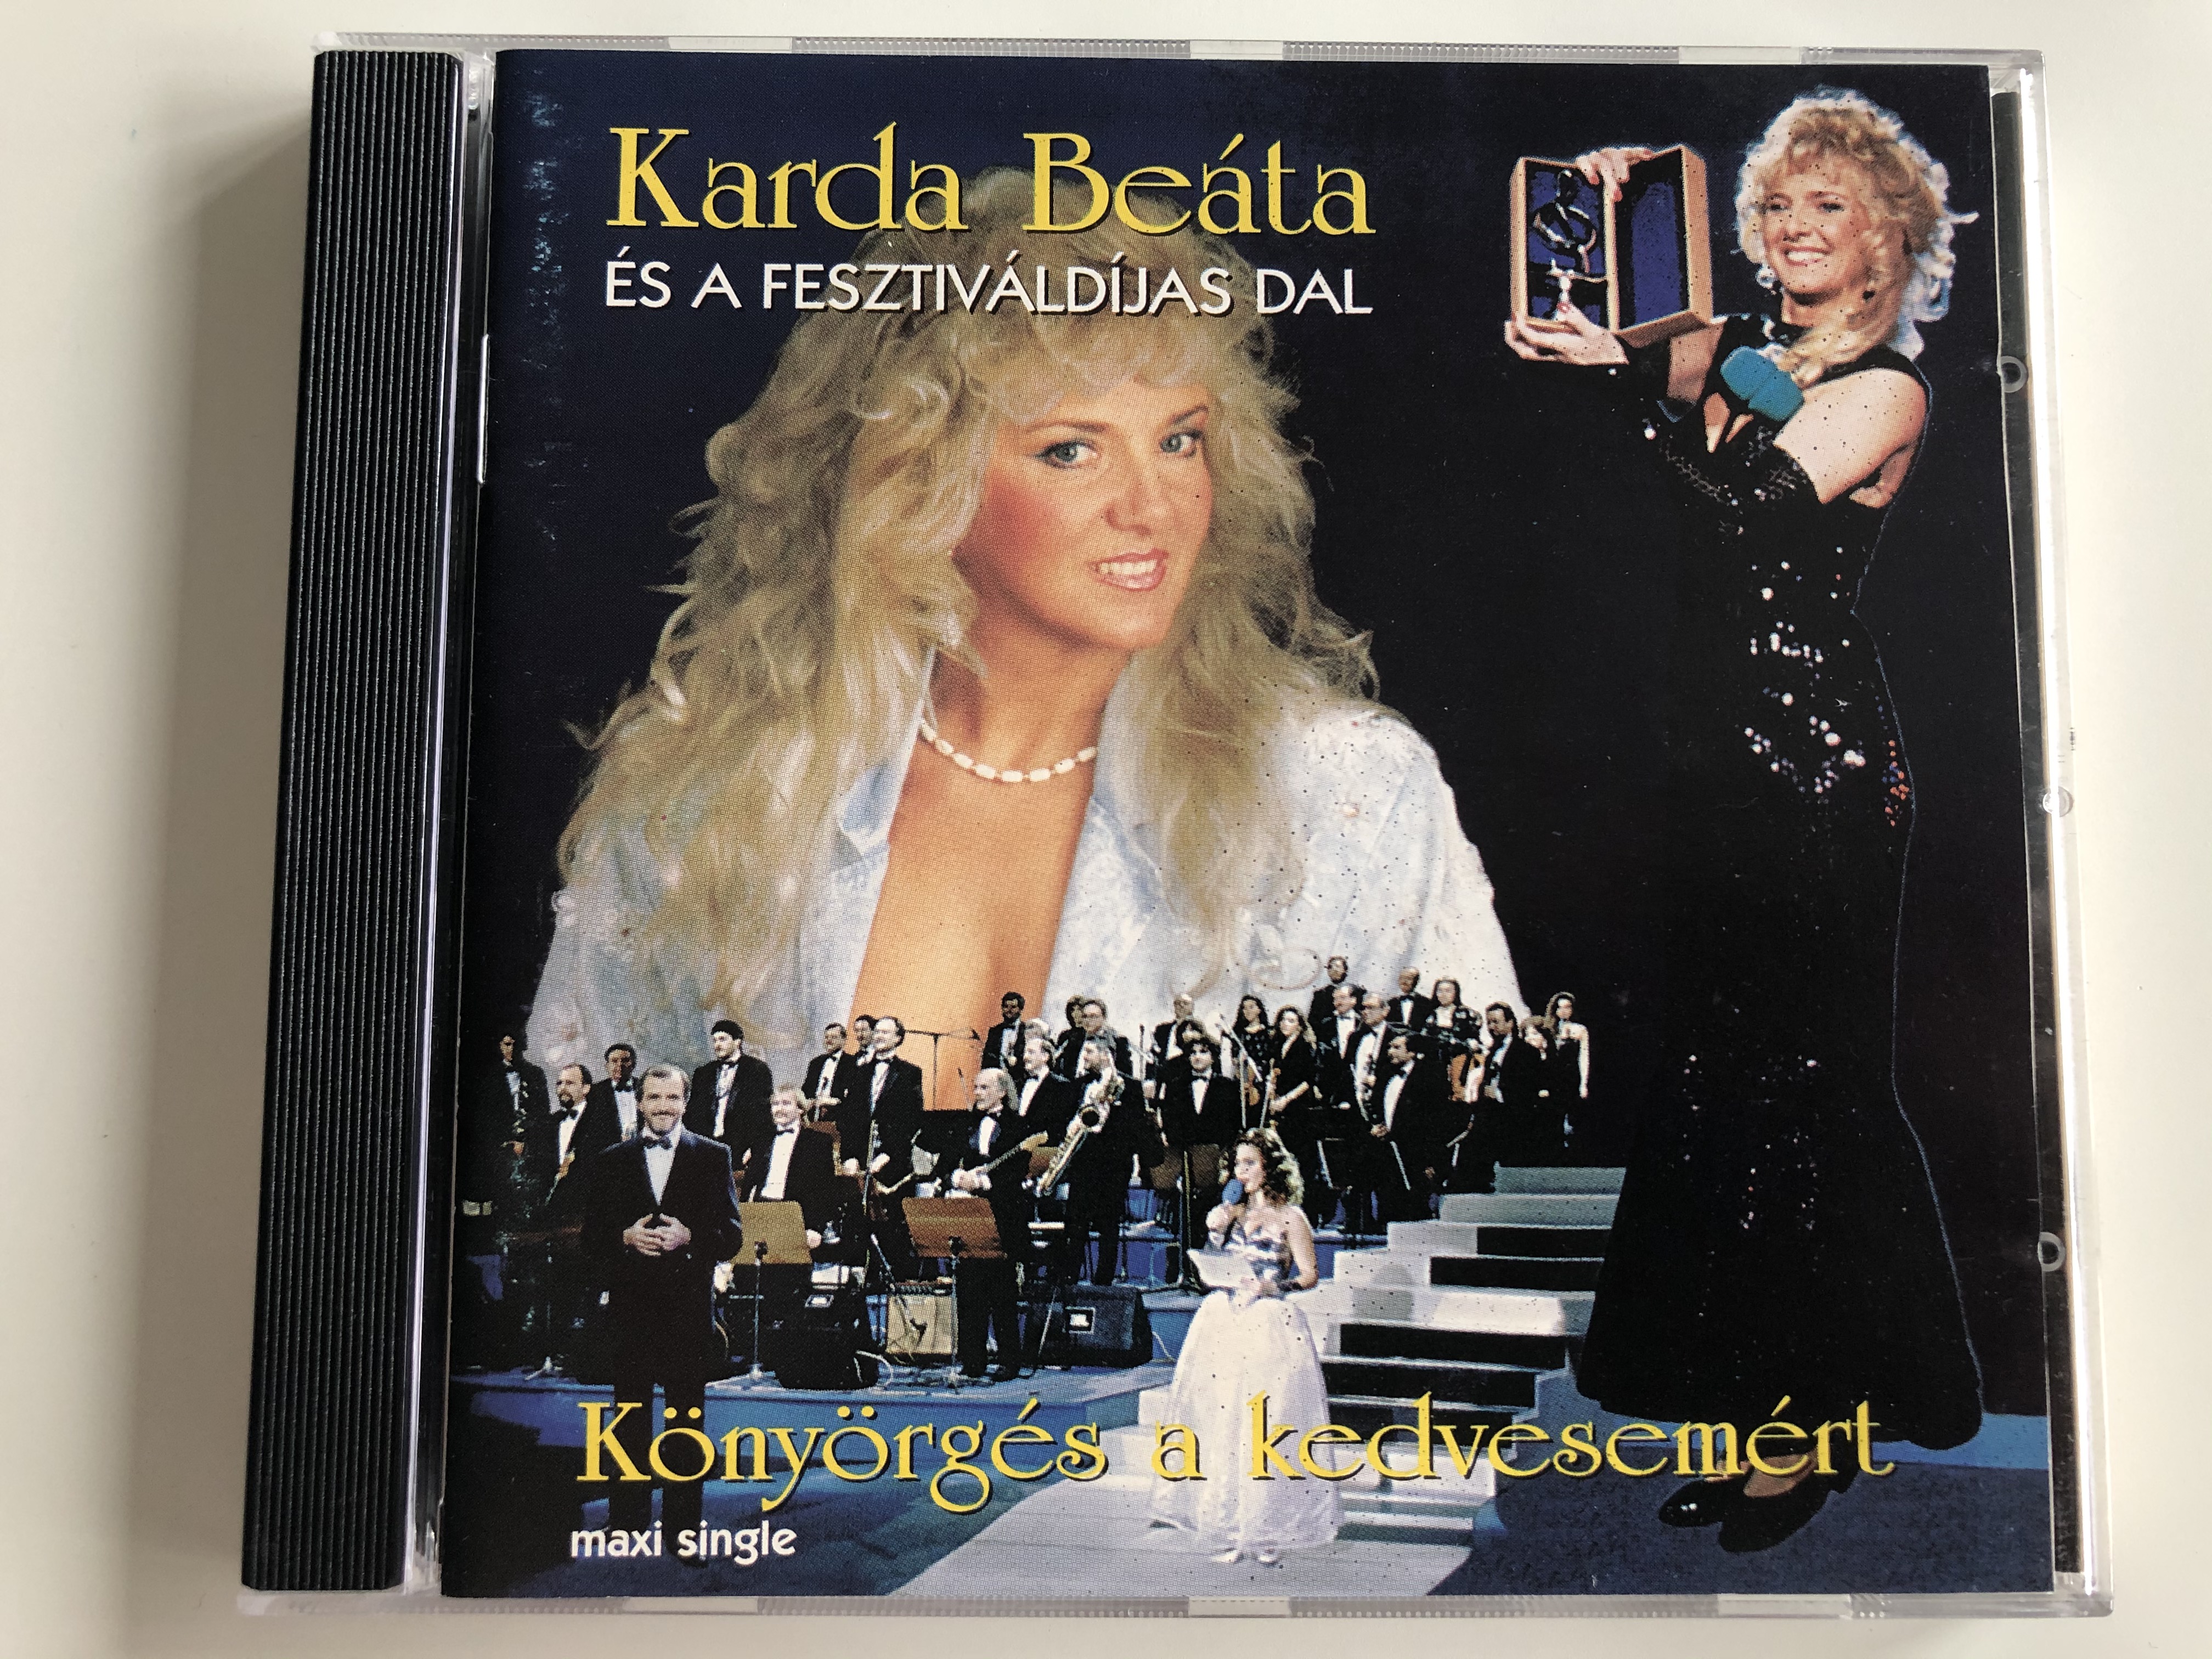 karda-beata-es-a-fesztivaldijas-dal-konyorges-a-kedvesemert-maxi-single-studio-alfa-audio-cd-cd-008-2-.jpg